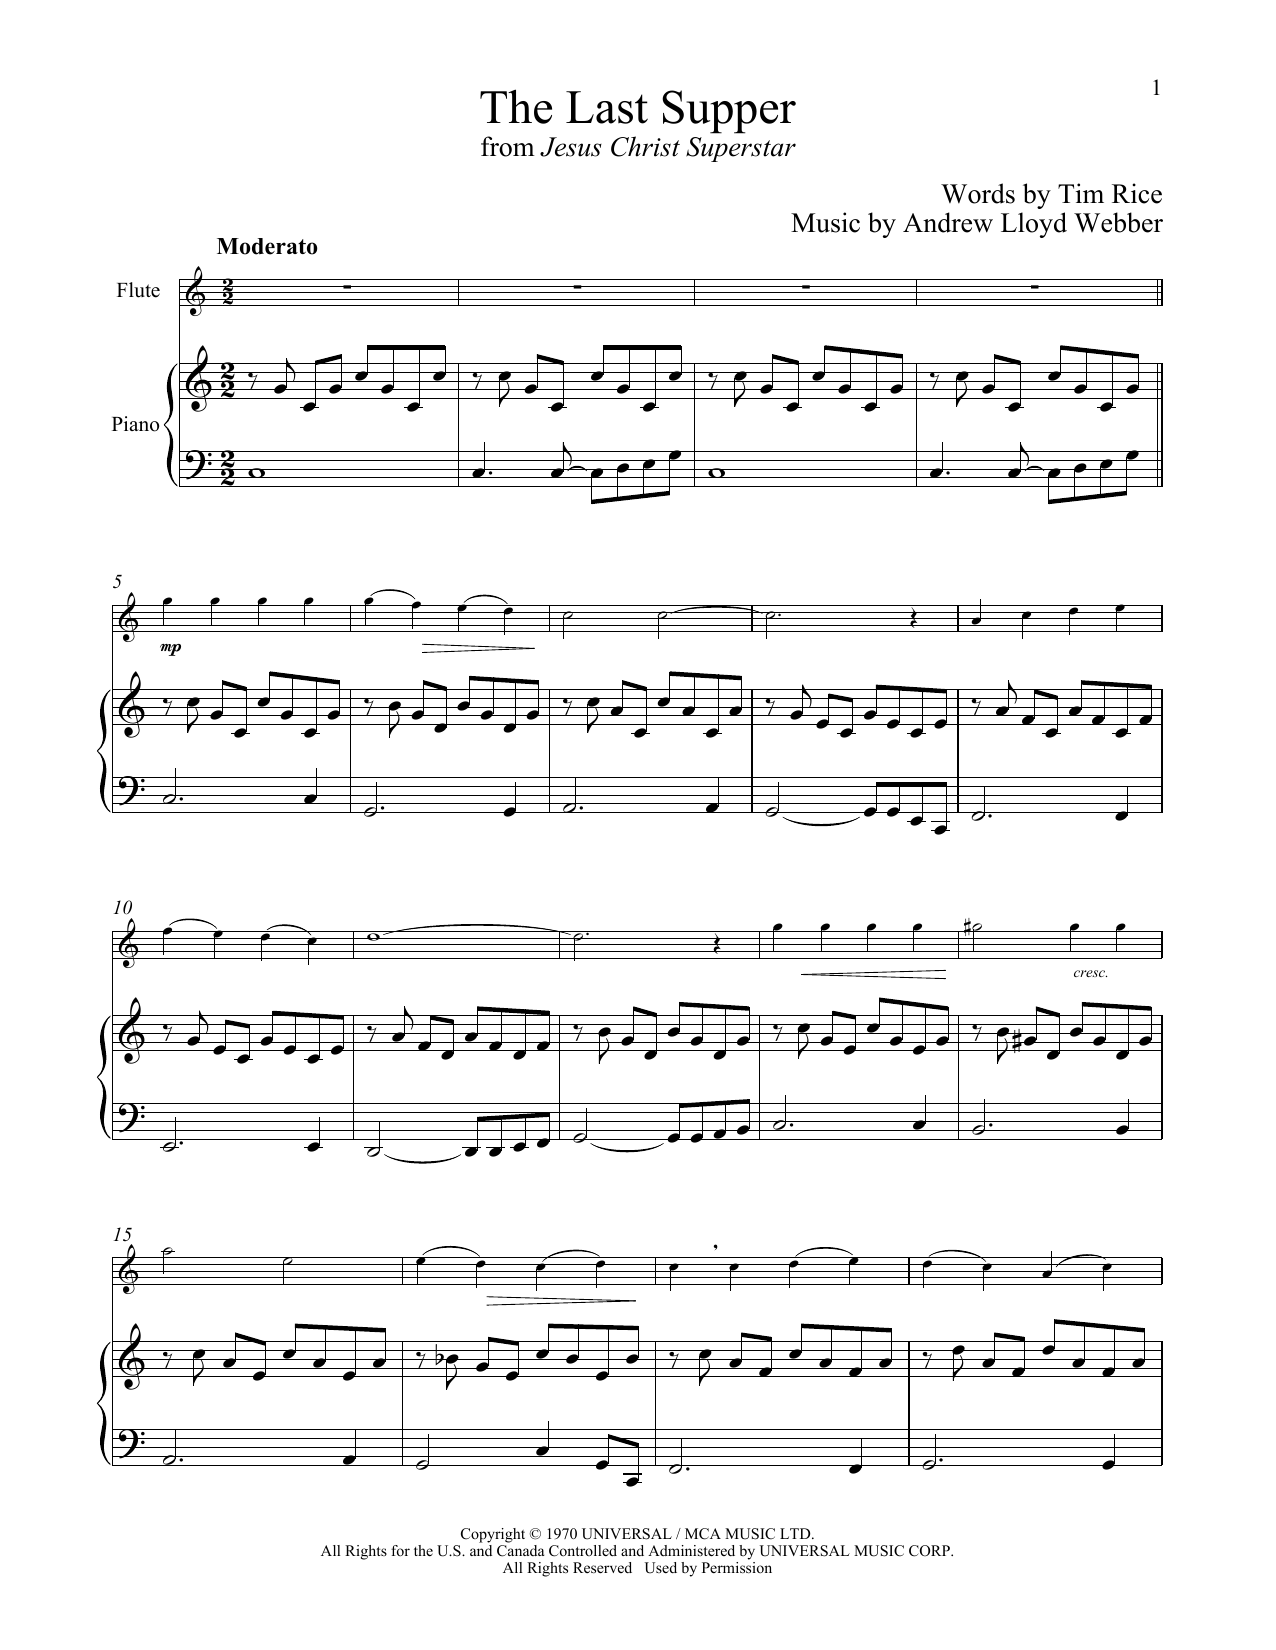 Andrew Lloyd Webber The Last Supper (from Jesus Christ Superstar) Sheet Music Notes & Chords for FLTPNO - Download or Print PDF